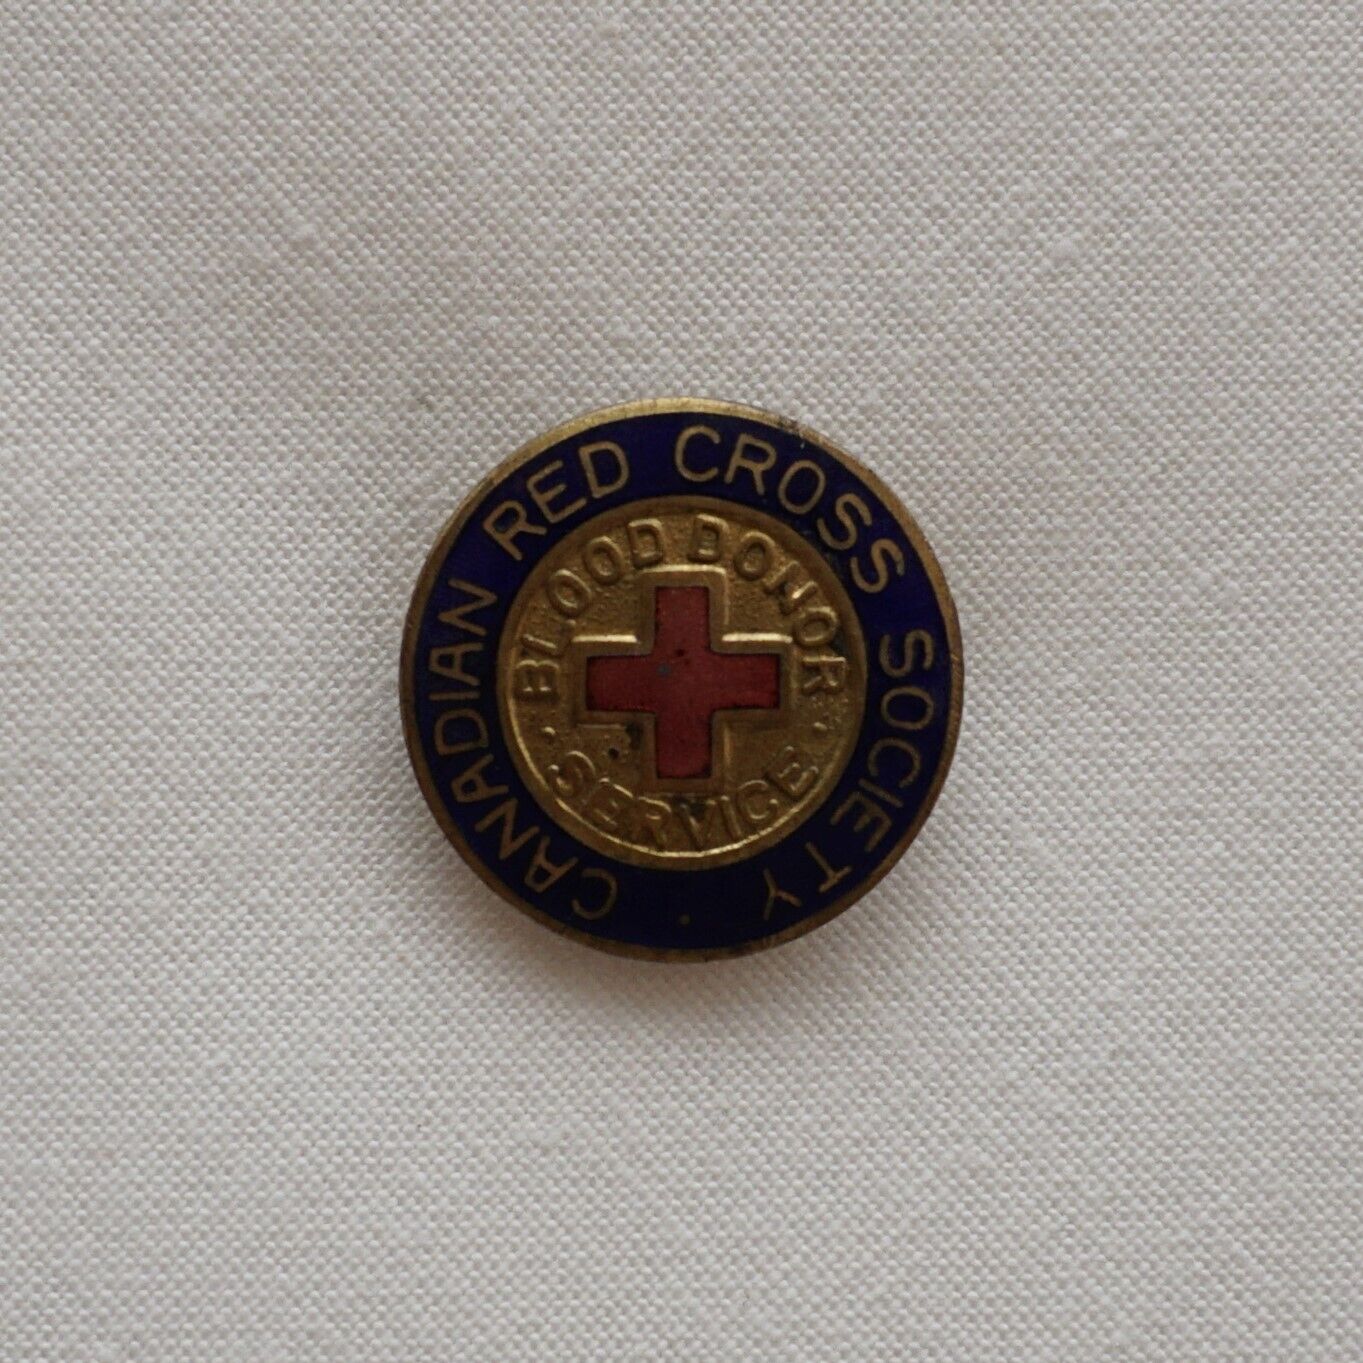 Vintage Canadian Red Cross Society Enamel Blood Donor Service Pin C. Lamond